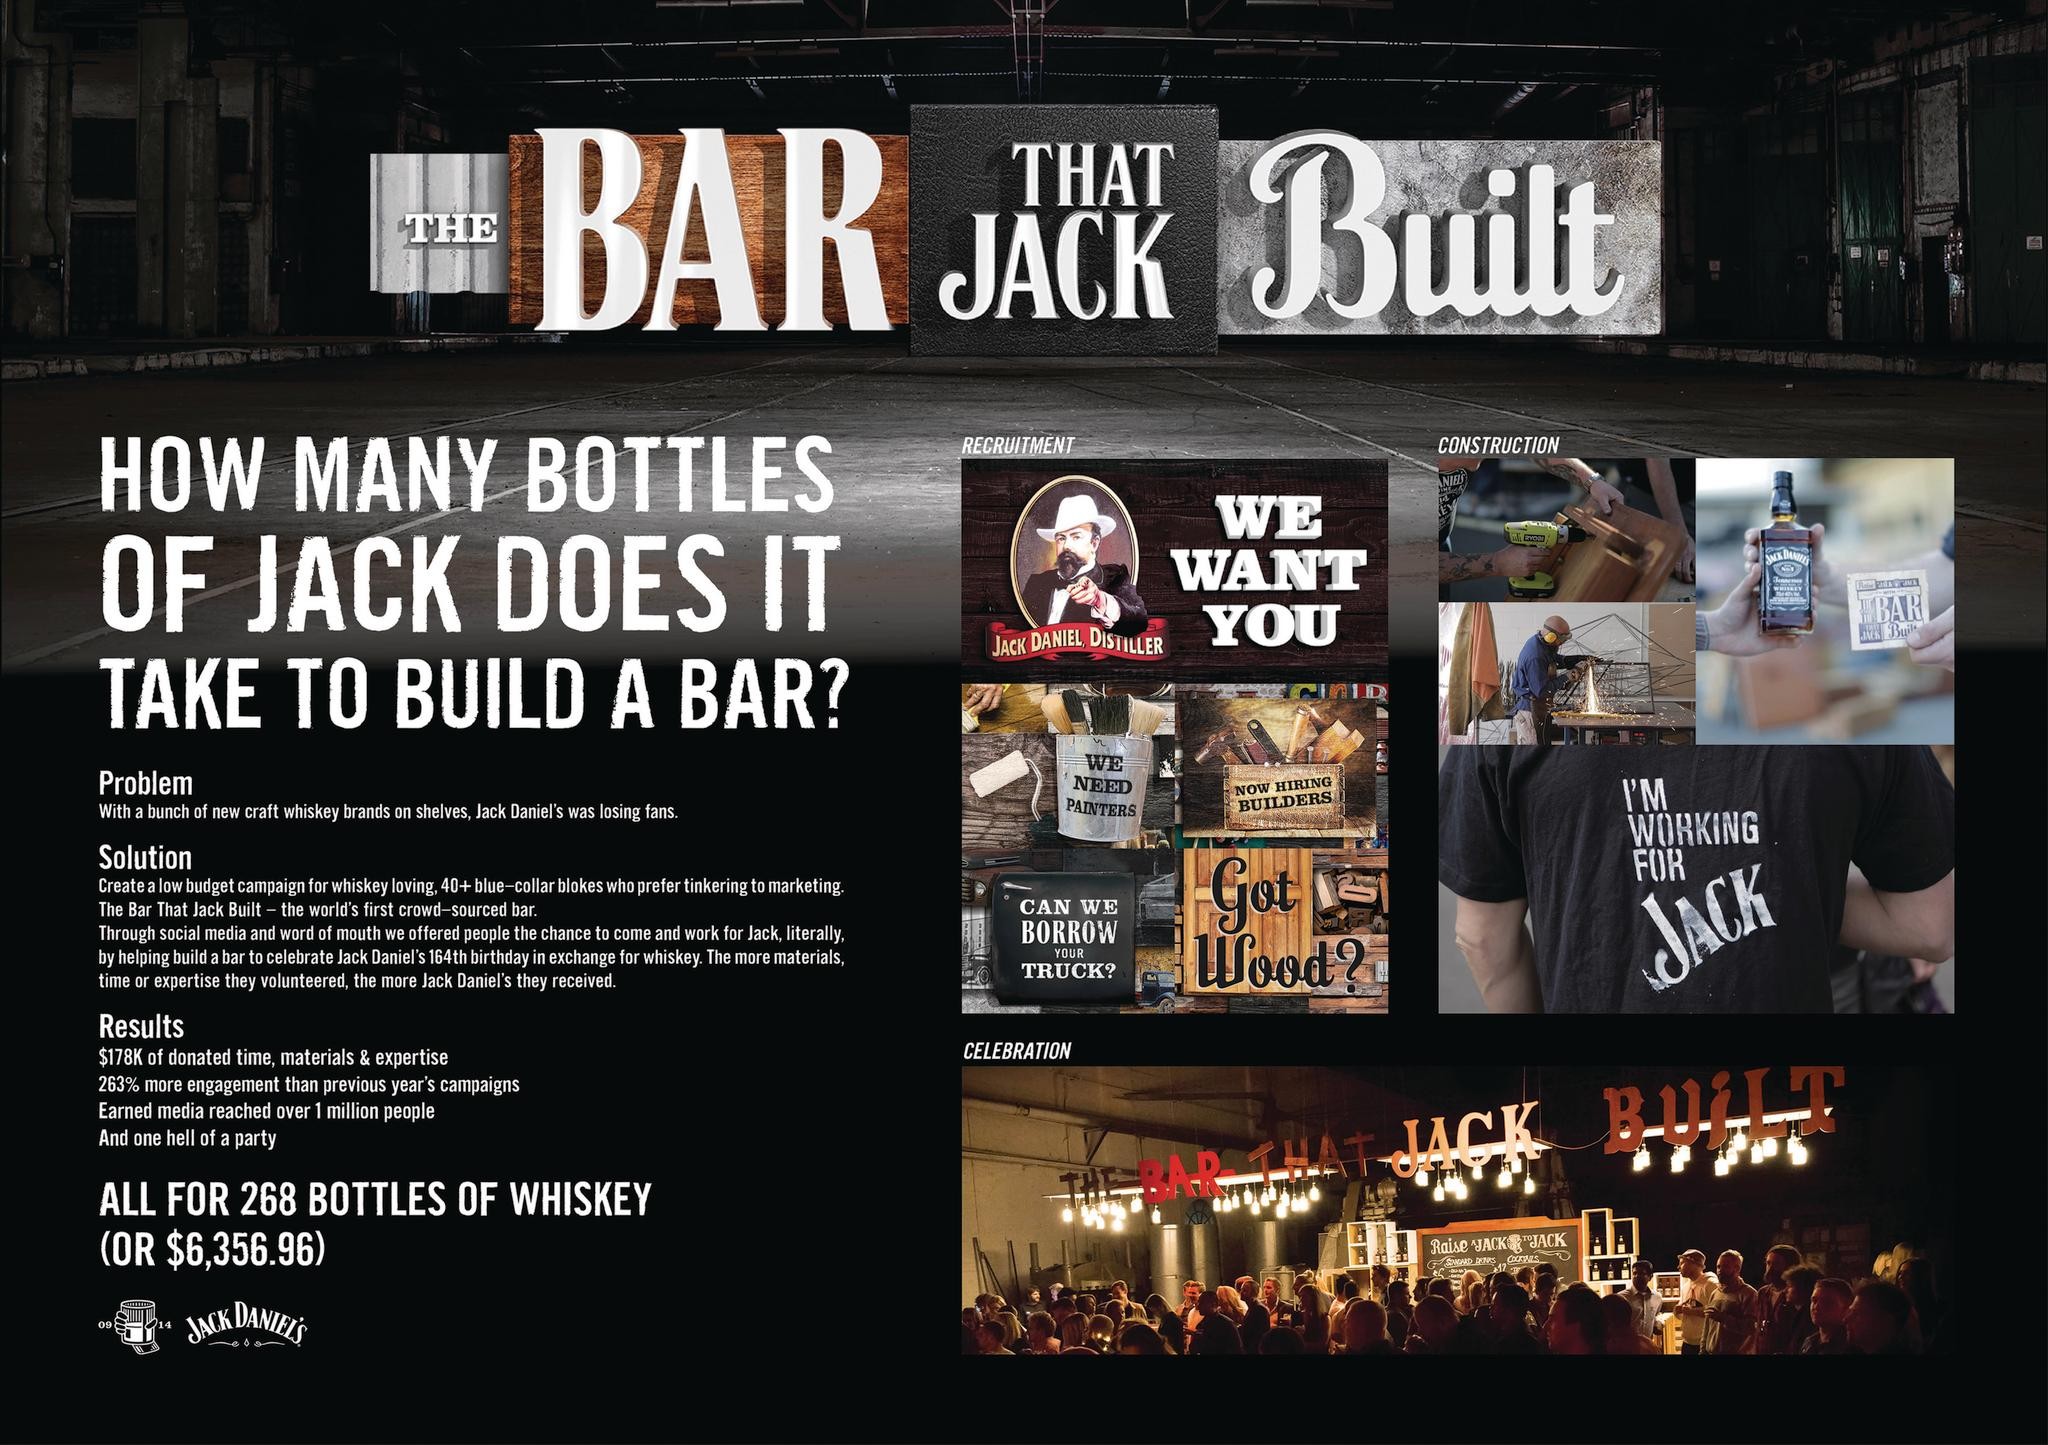 THE BAR THAT JACK BUILT